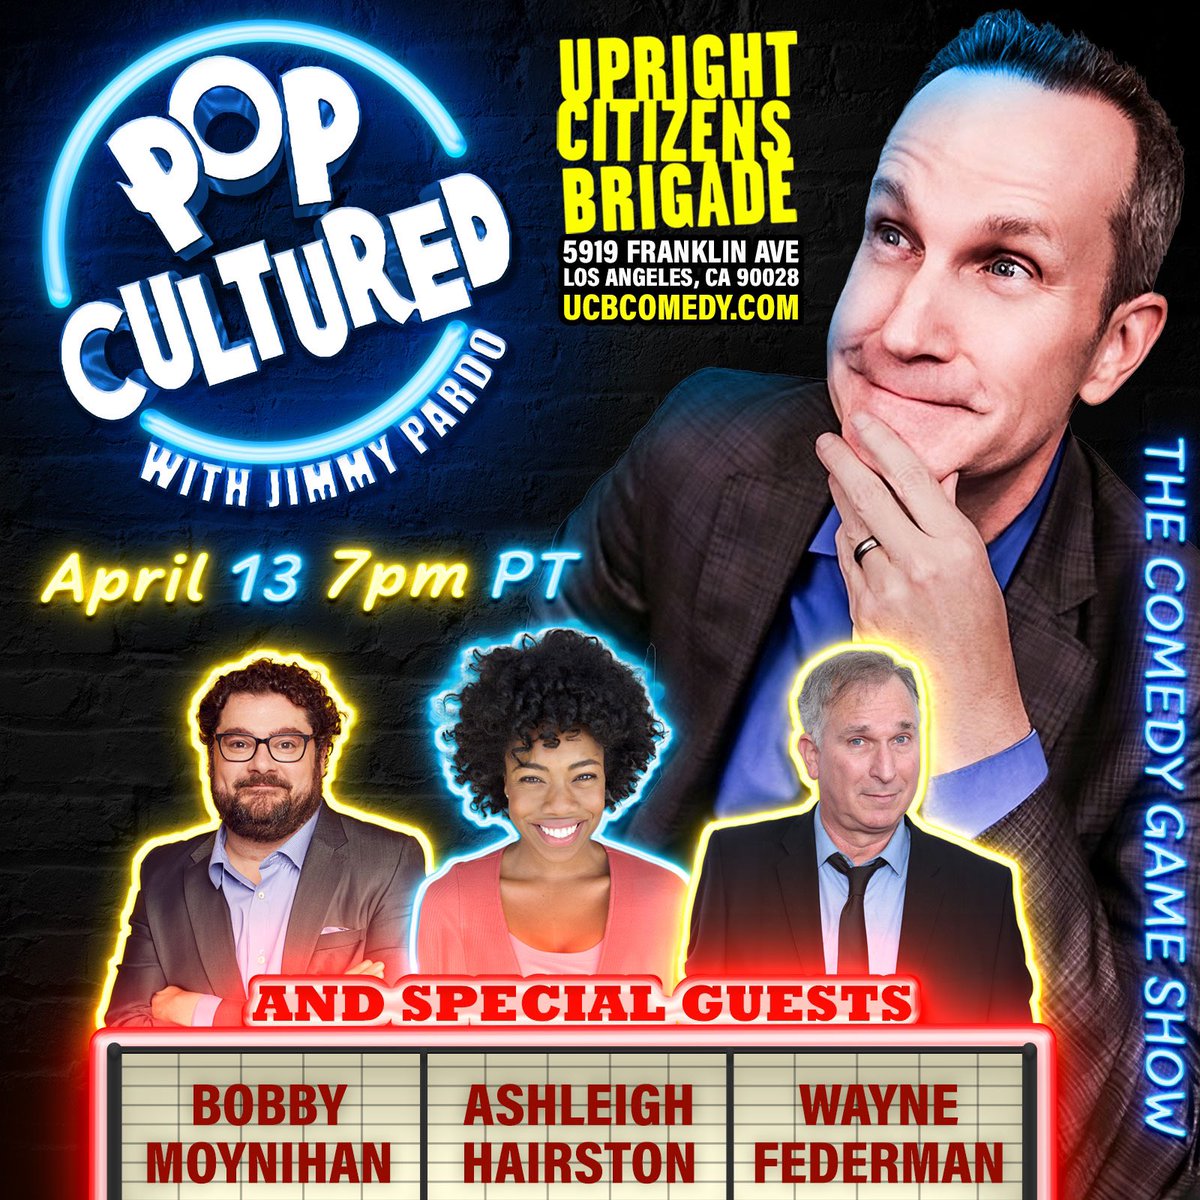 This Saturday’s @PopCulturedGame will be livestreamed for just $10 via @ucbtla!! Great lineup: @bibbymoynihan, @shleighcrystal, @Federman! Get tix here: ucbcomedy.com/show/pop-cultu…